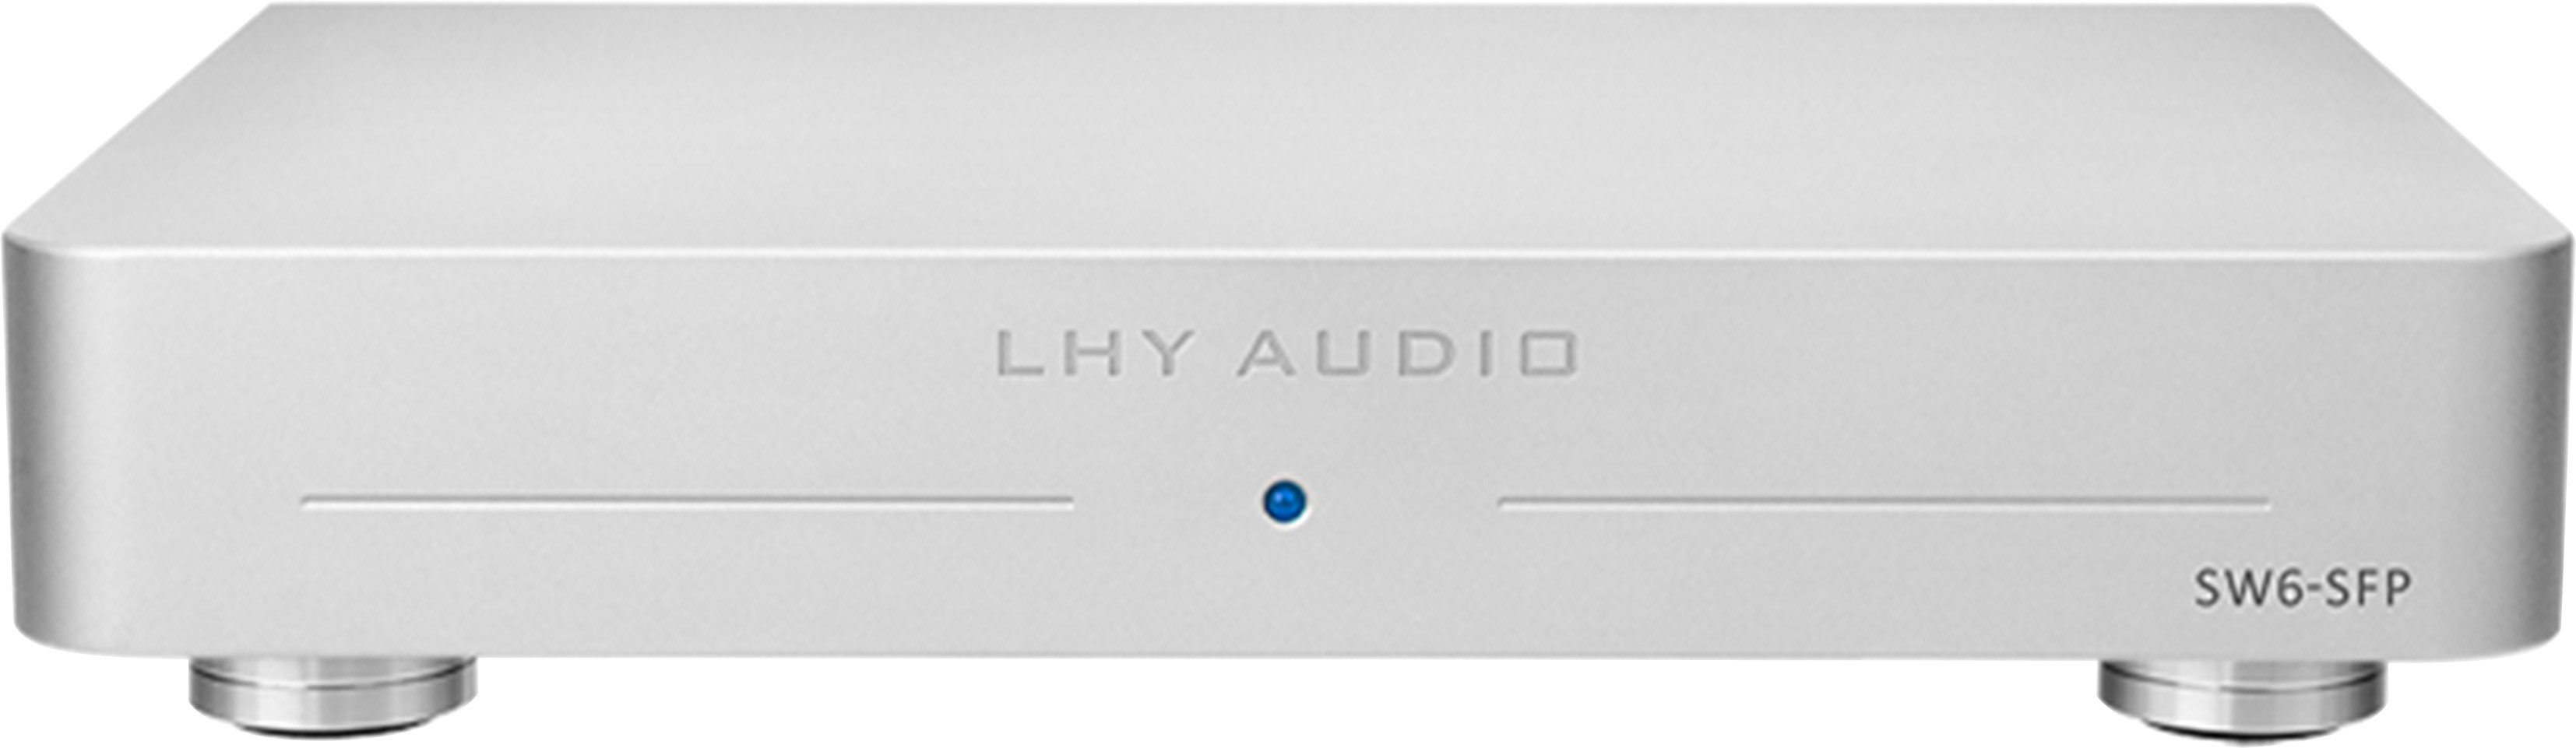 LHY AUDIO SW-6 SPF Network Switch 5x RJ45 1x Optical Fiber Silver